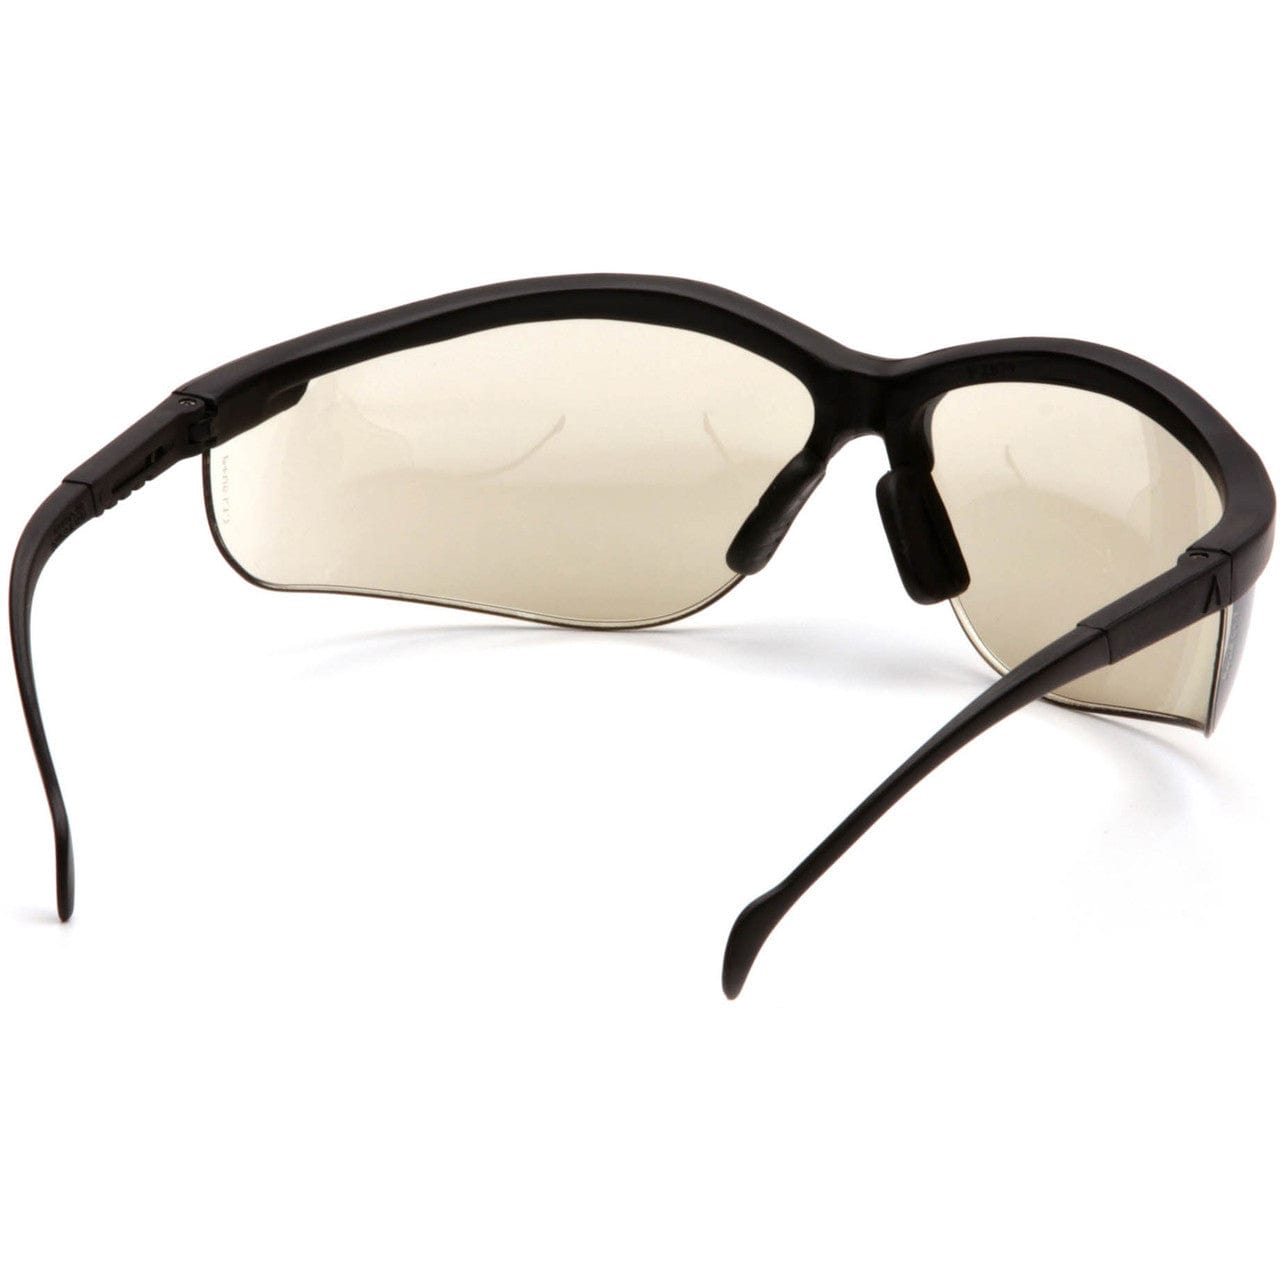 Pyramex Venture 2 Safety Glasses Black Frame Indoor/Outdoor Lens SB1880S Inside View